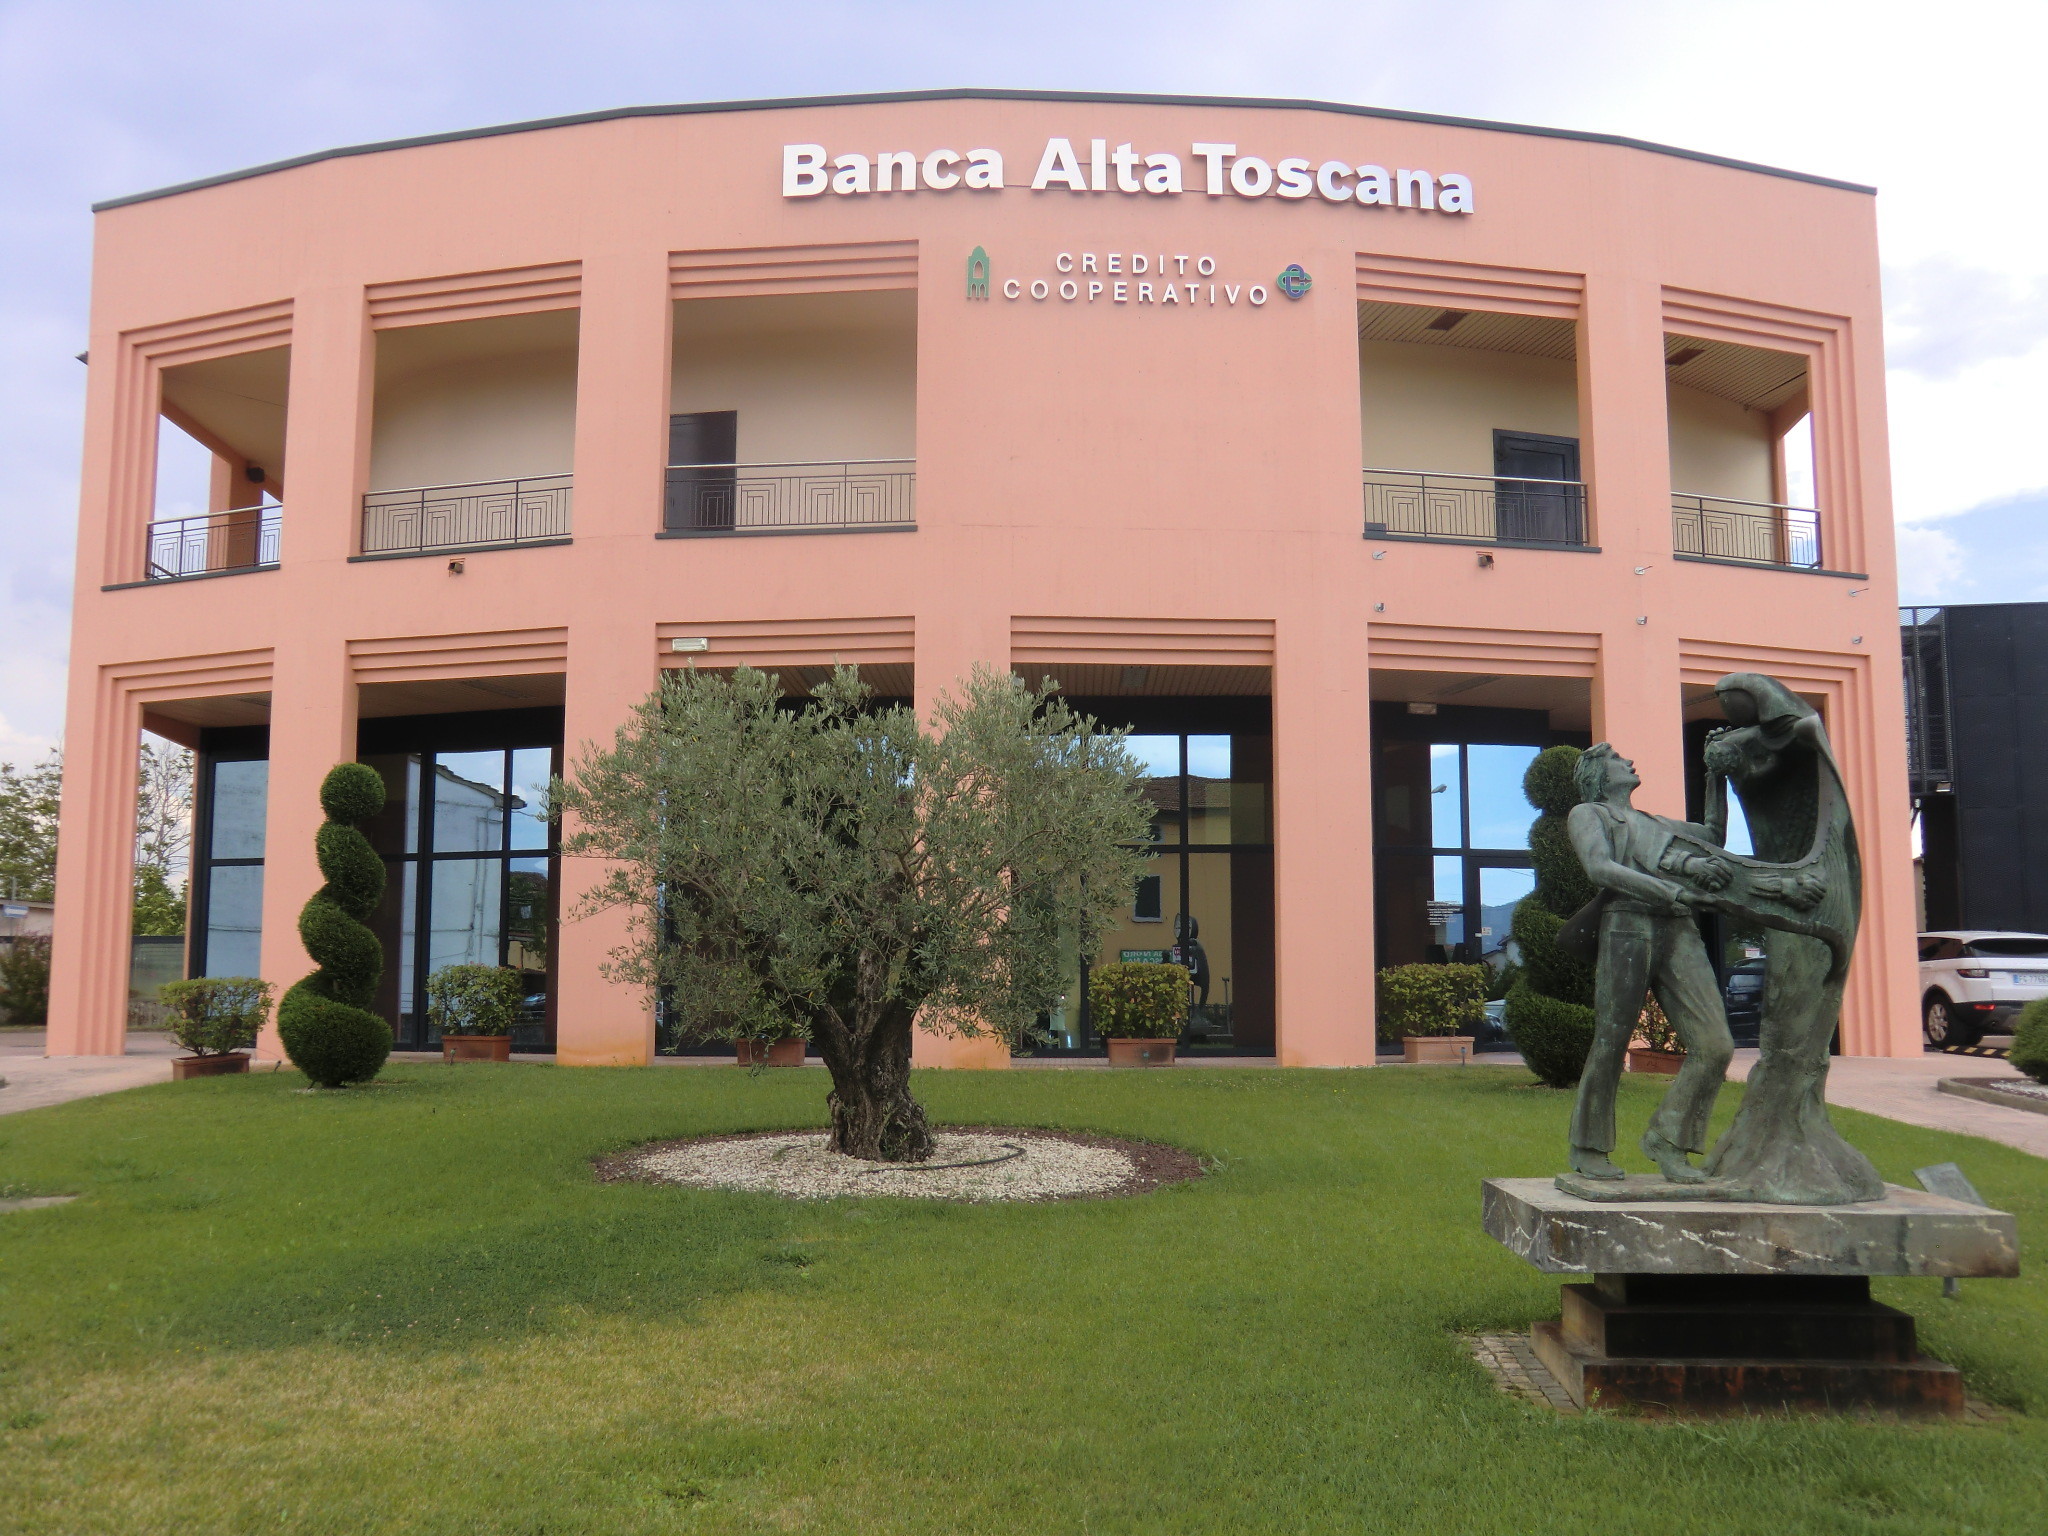 Annunciata l'operazione Vival Banca - Banca Alta Toscana - Banca Centro Toscana-Umbria